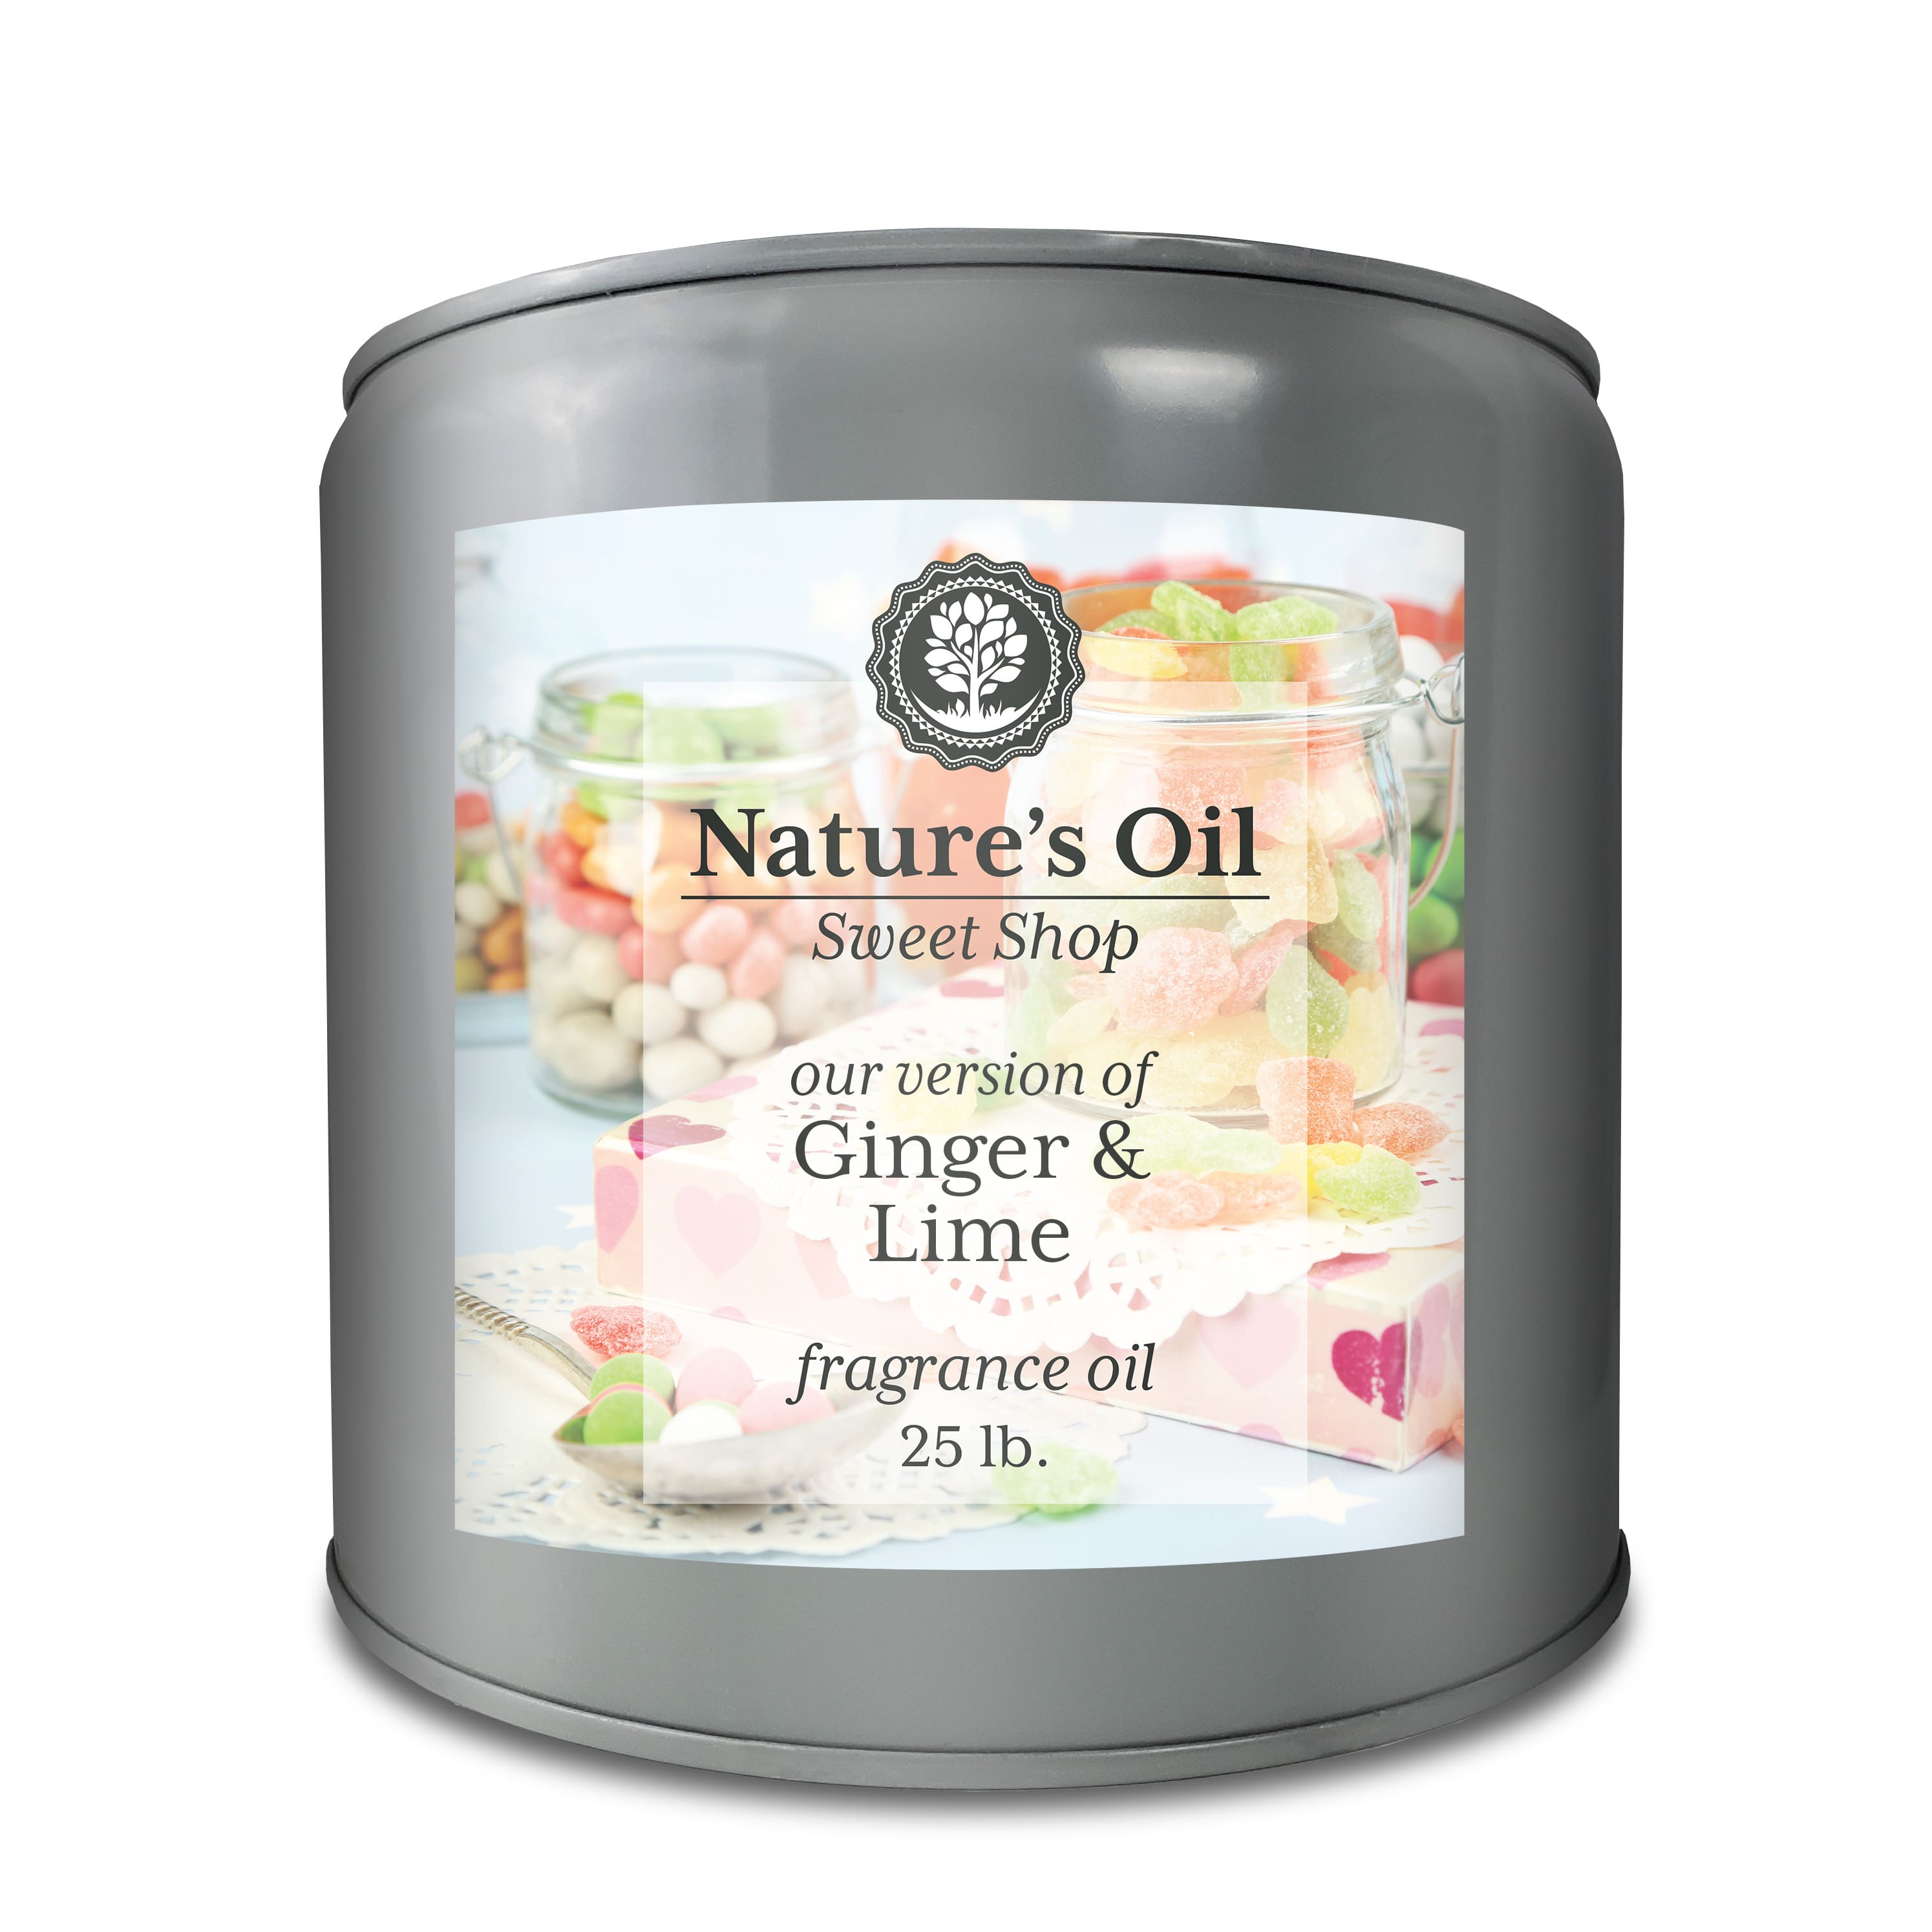 Ginger & Lime (our version of) Fragrance Oil